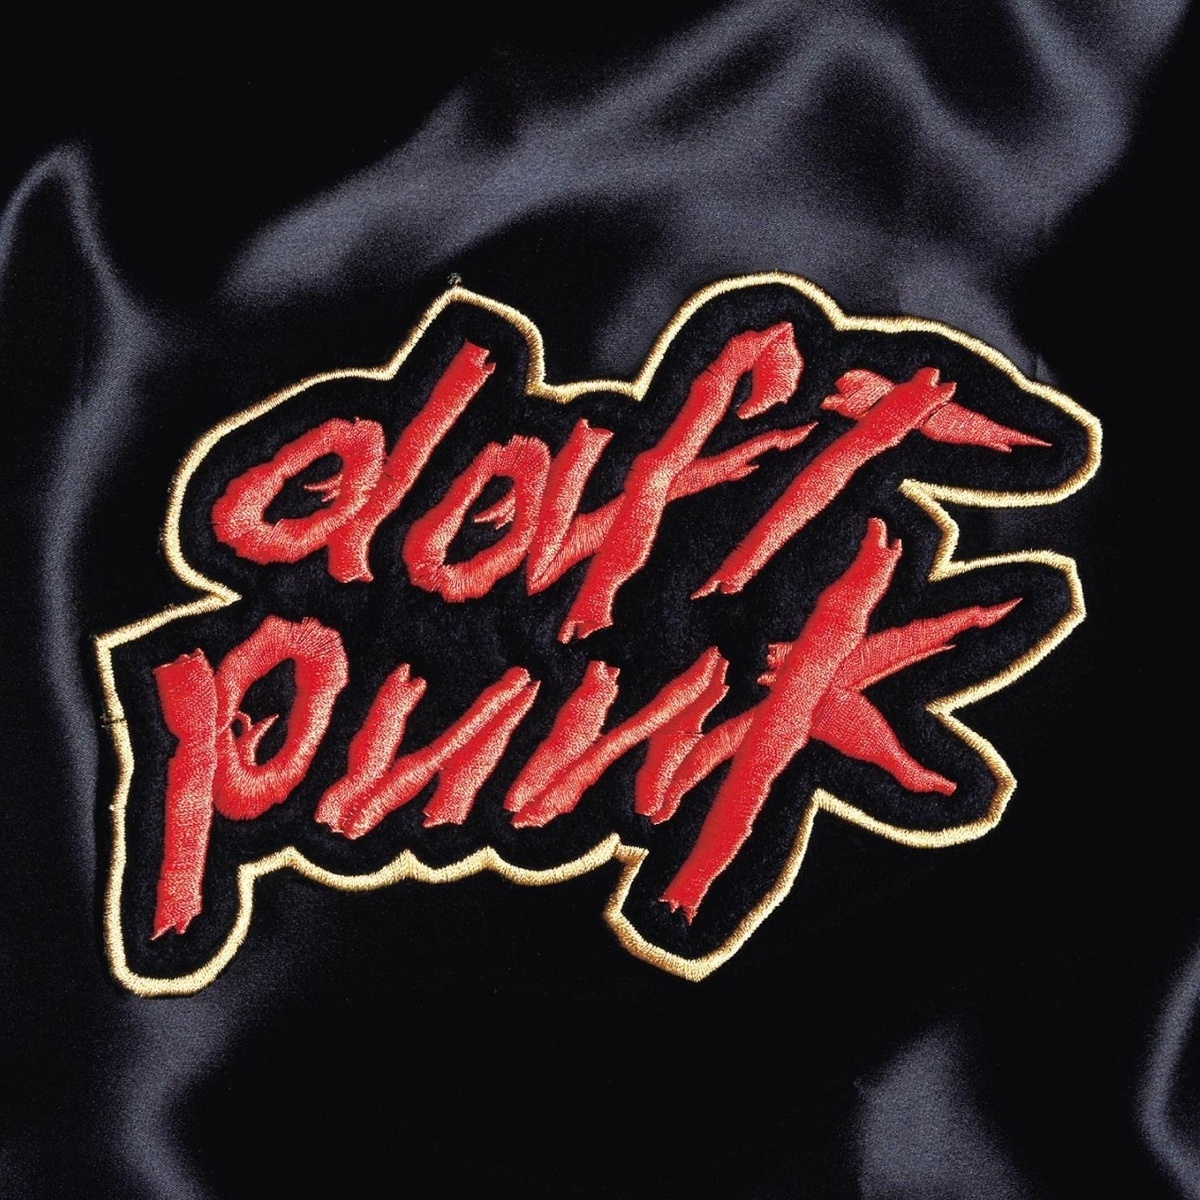 Homework - Daft Punk. (CD)